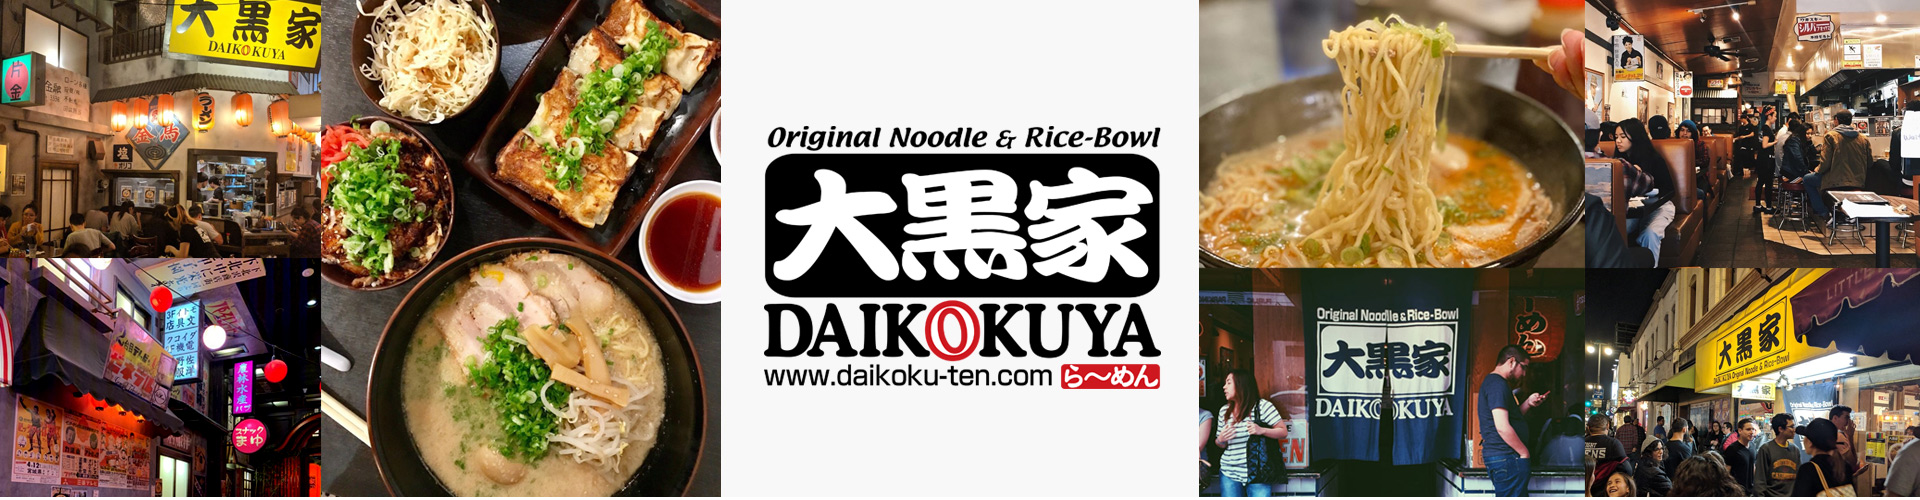 Daikokuya banner and logo